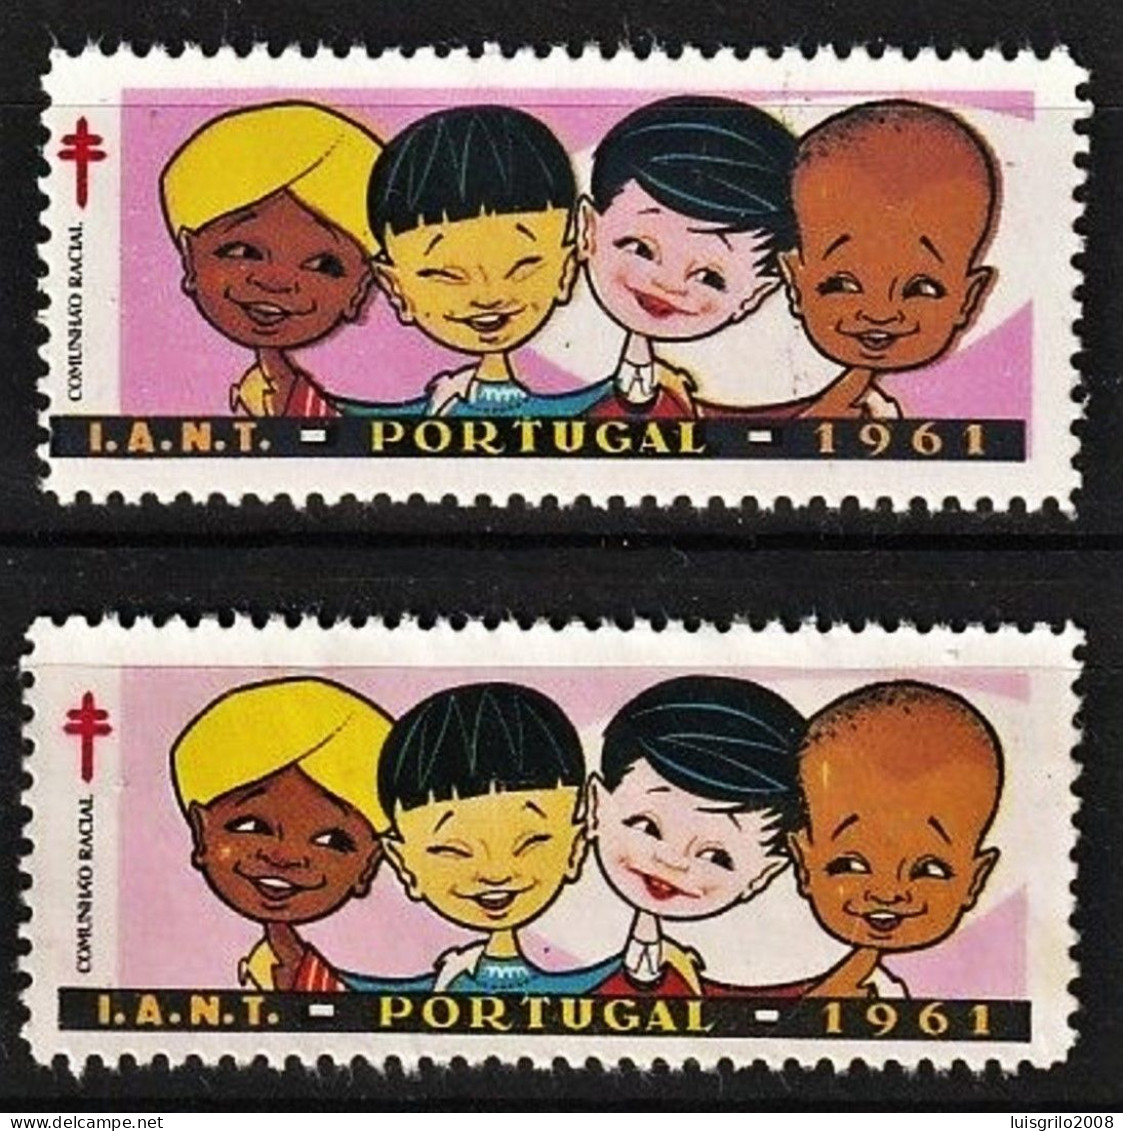 Vignettes/ Vinhetas, Portugal 1961 - Comunhão Racial, I.A.N.T. -||-  Série Complète - MNH - Local Post Stamps